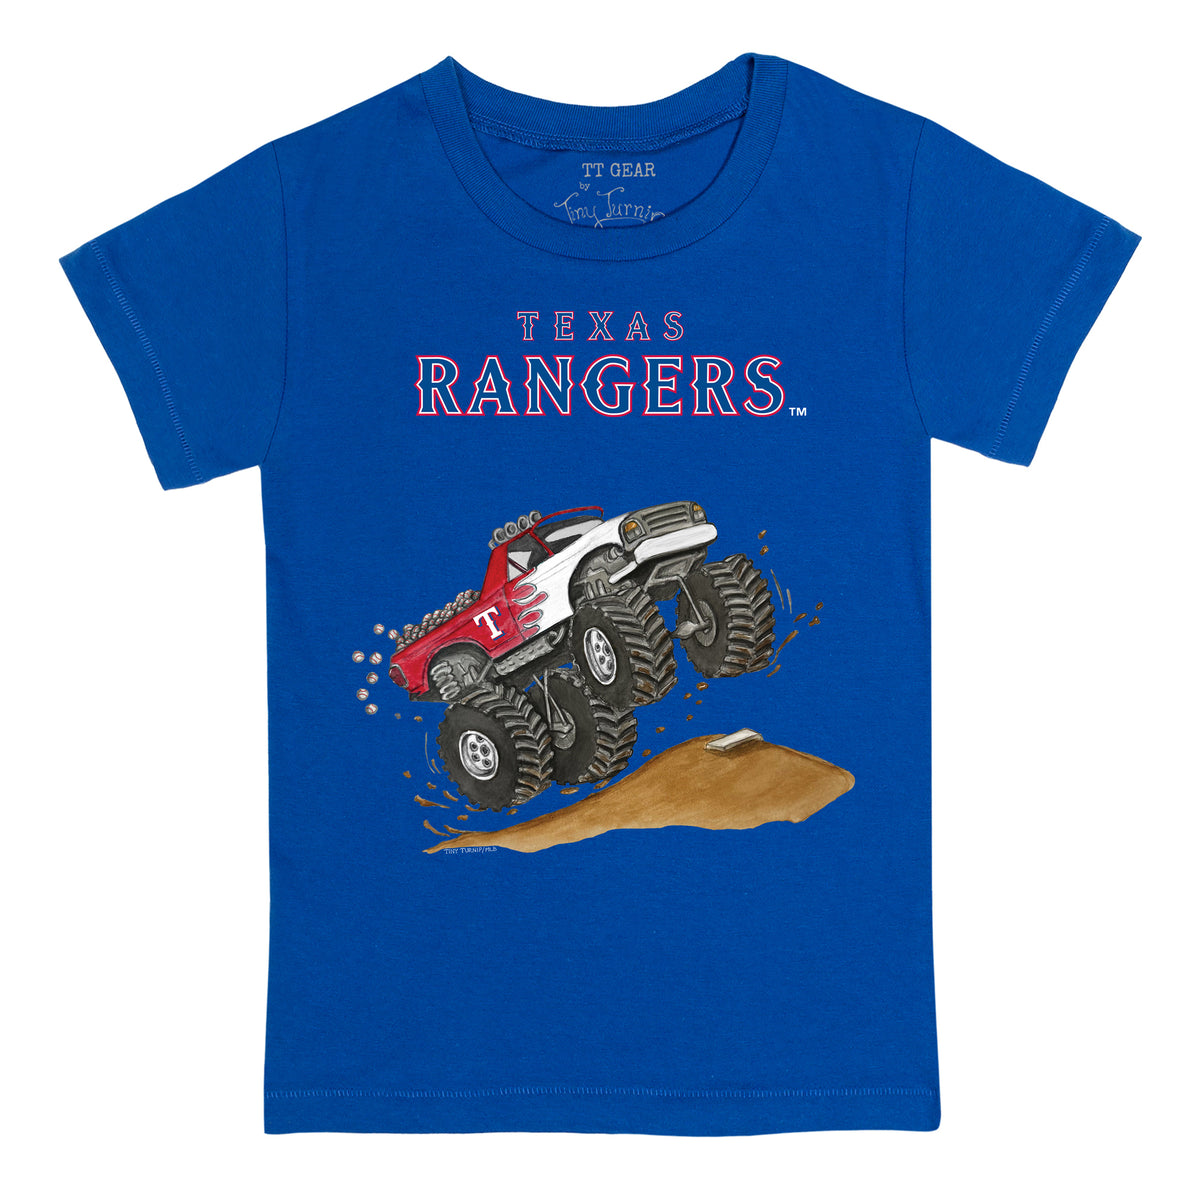 Texas Rangers Monster Truck Tee Shirt Youth Small (6-8) / Royal Blue